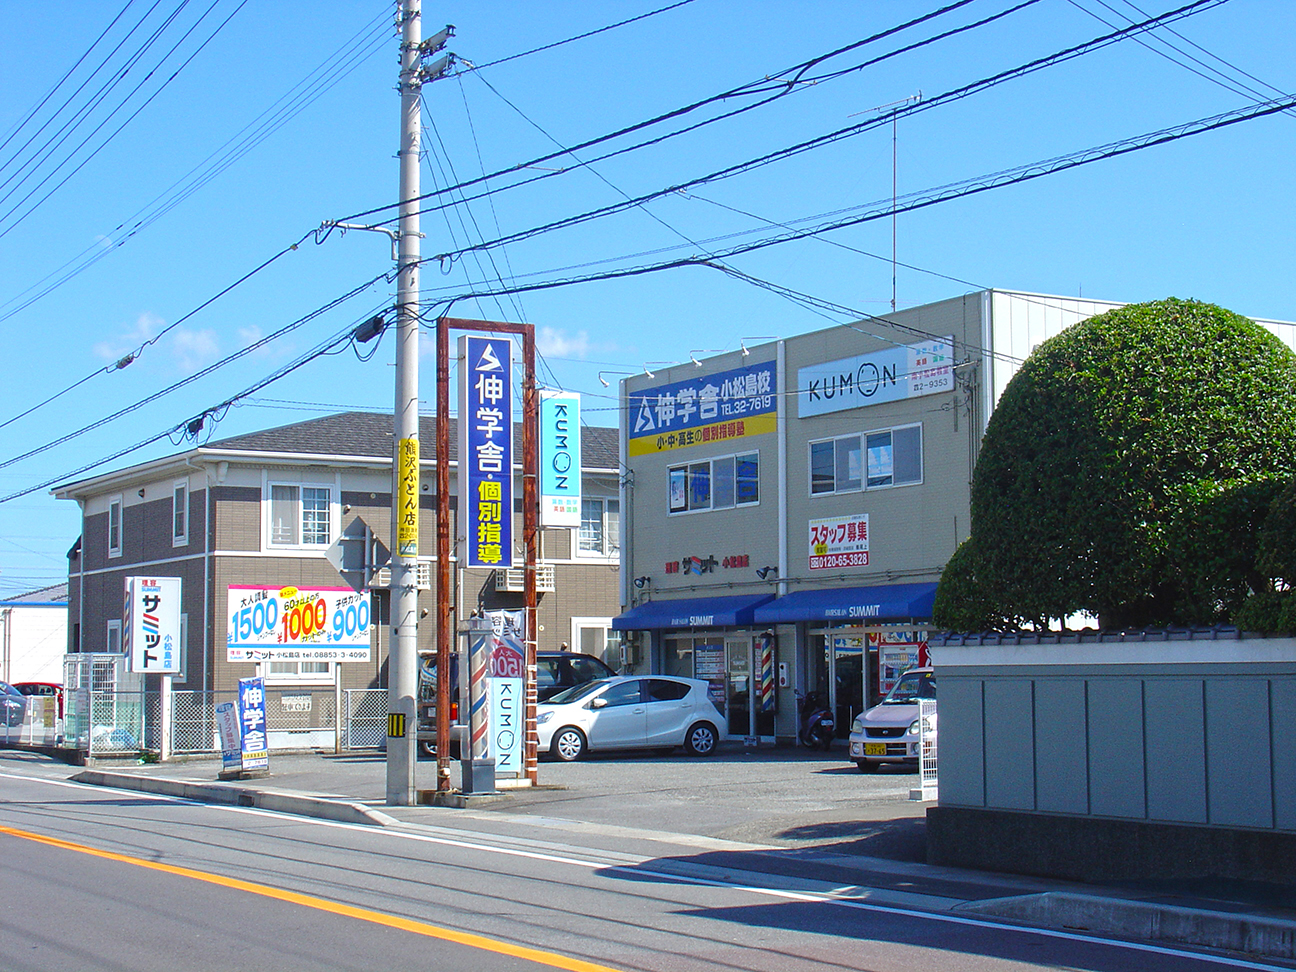 南小松島 - Minami Komatsu Shima - no ATM but Kumon&hellip;